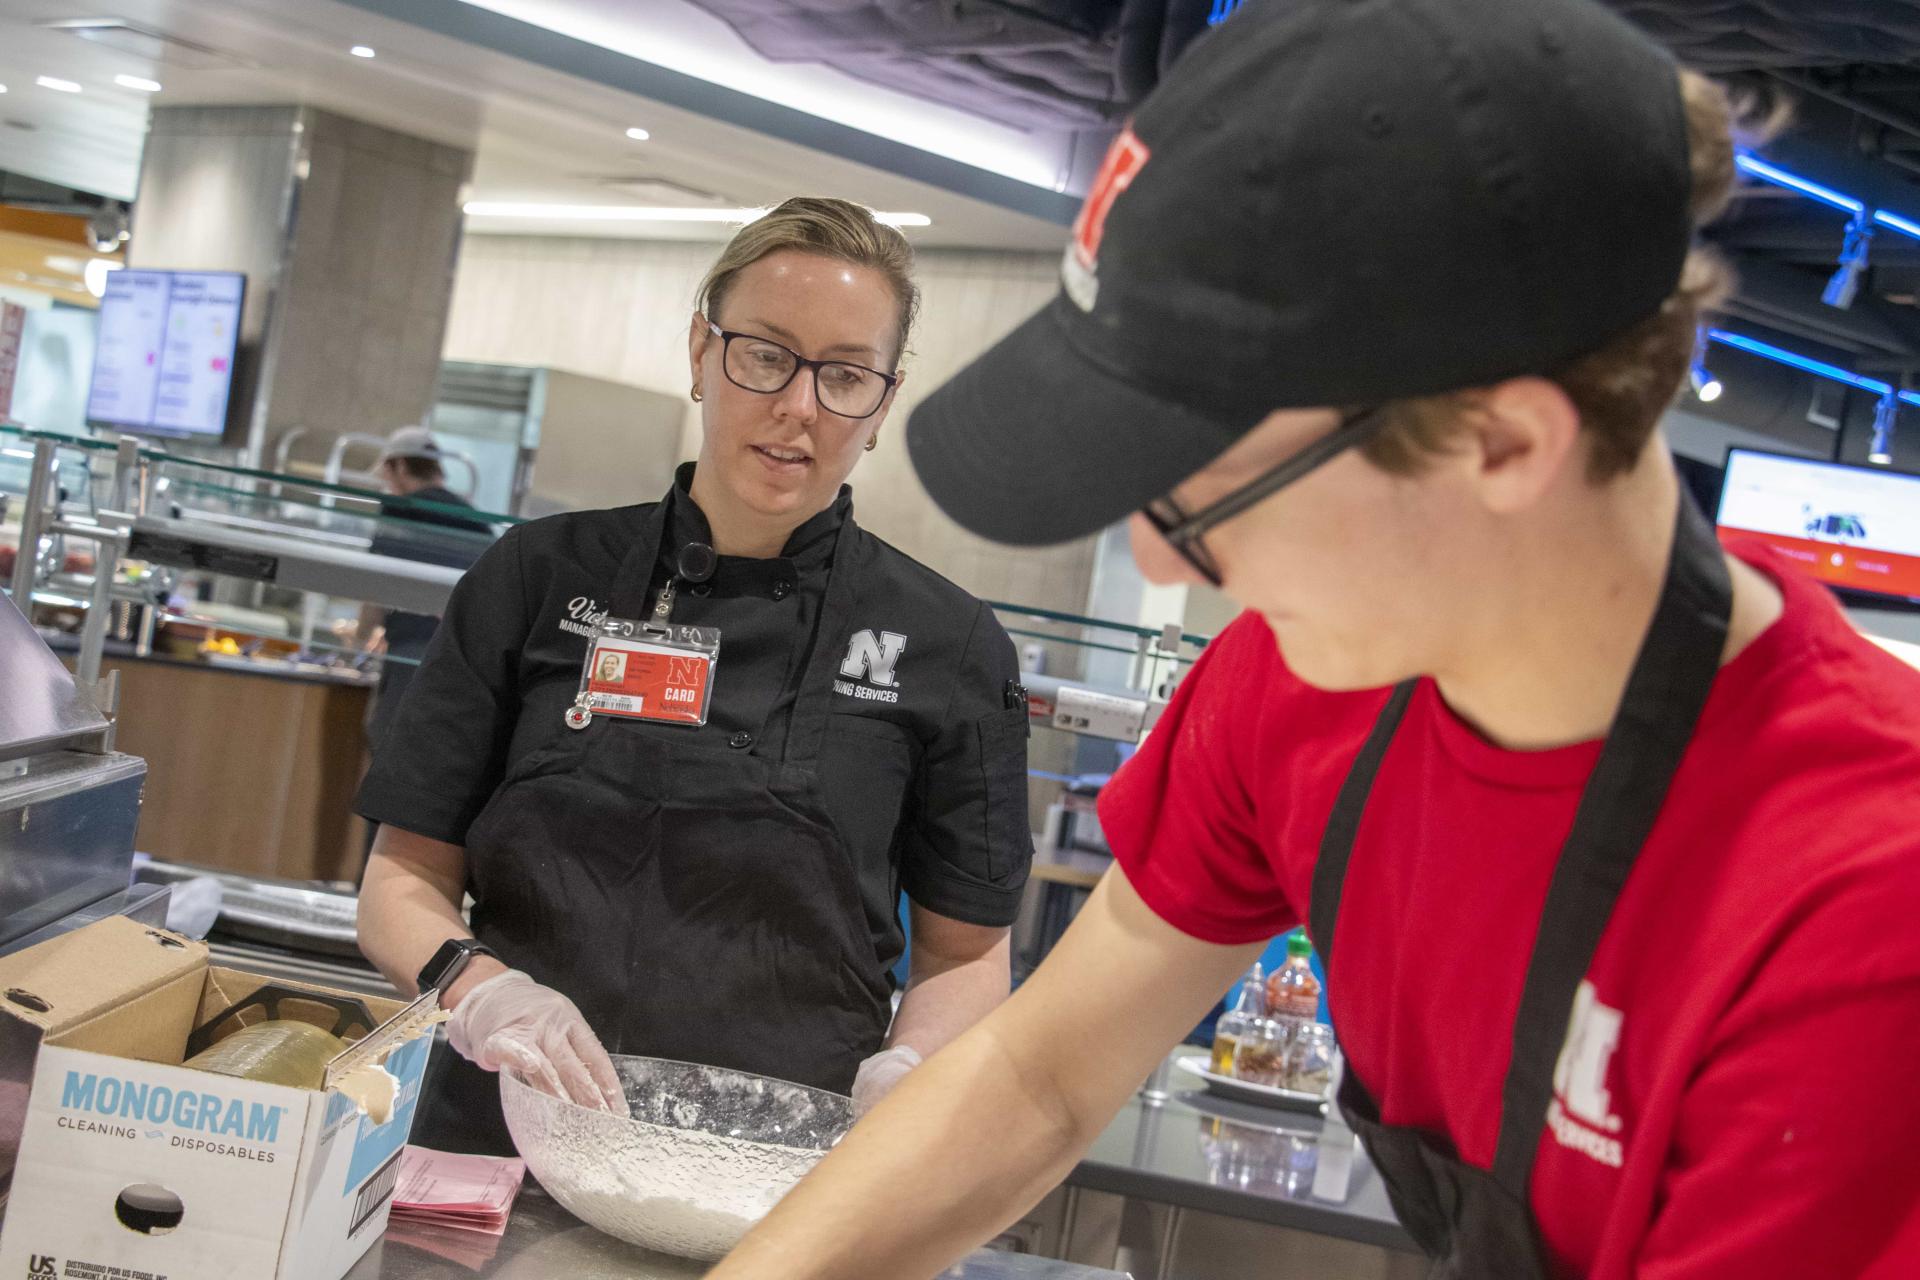 Dining staff members overlooks a student staff member preparing menu items